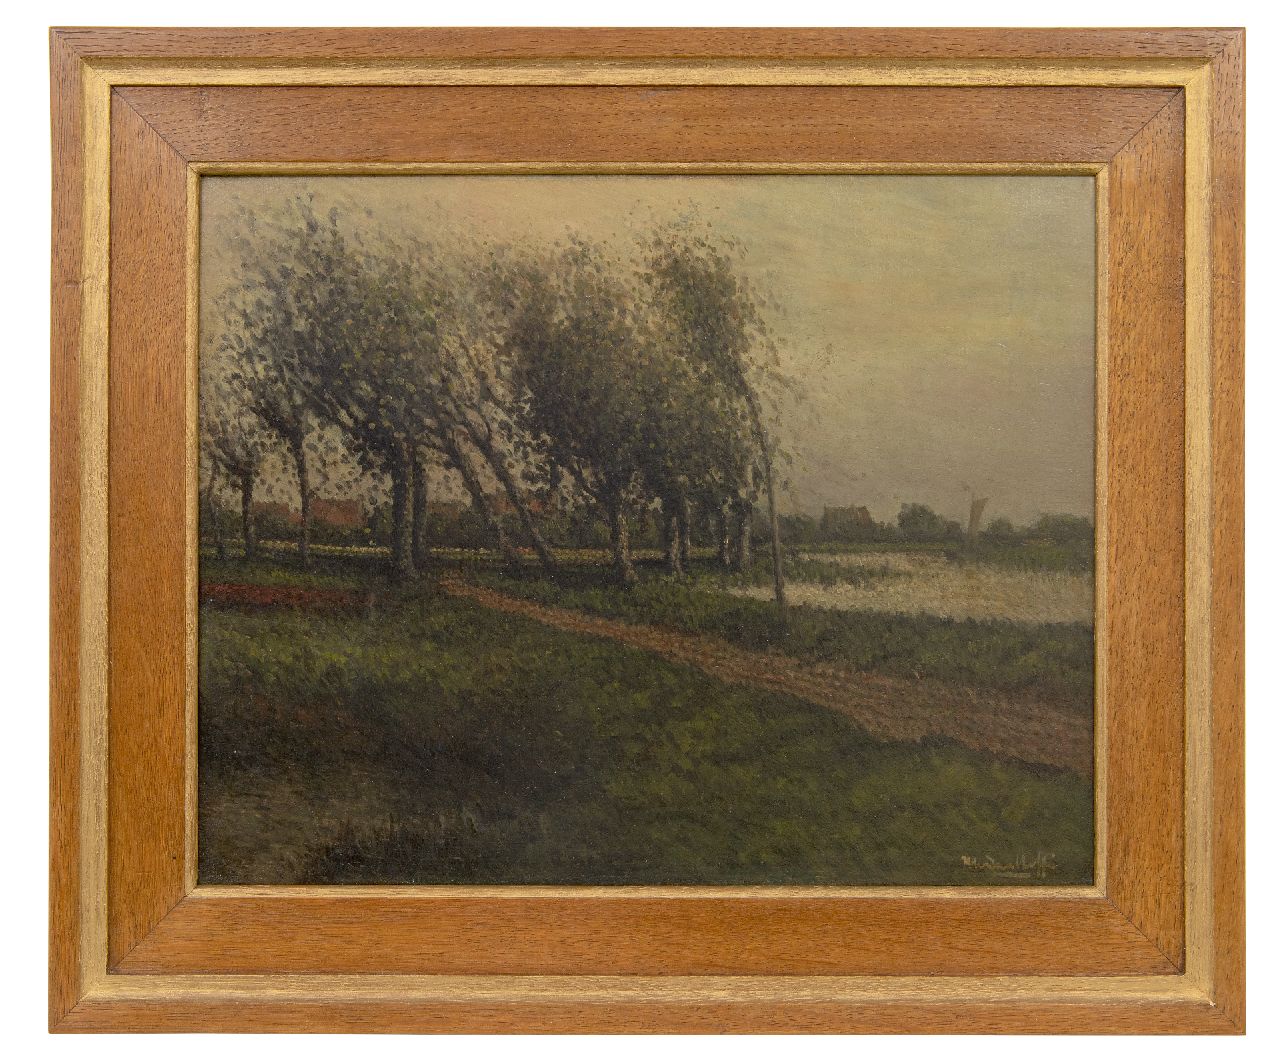 Daalhoff H.A. van | Hermanus Antonius 'Henri' van Daalhoff | Paintings offered for sale | Path along the river, oil on panel 32.0 x 40.4 cm, signed l.r.